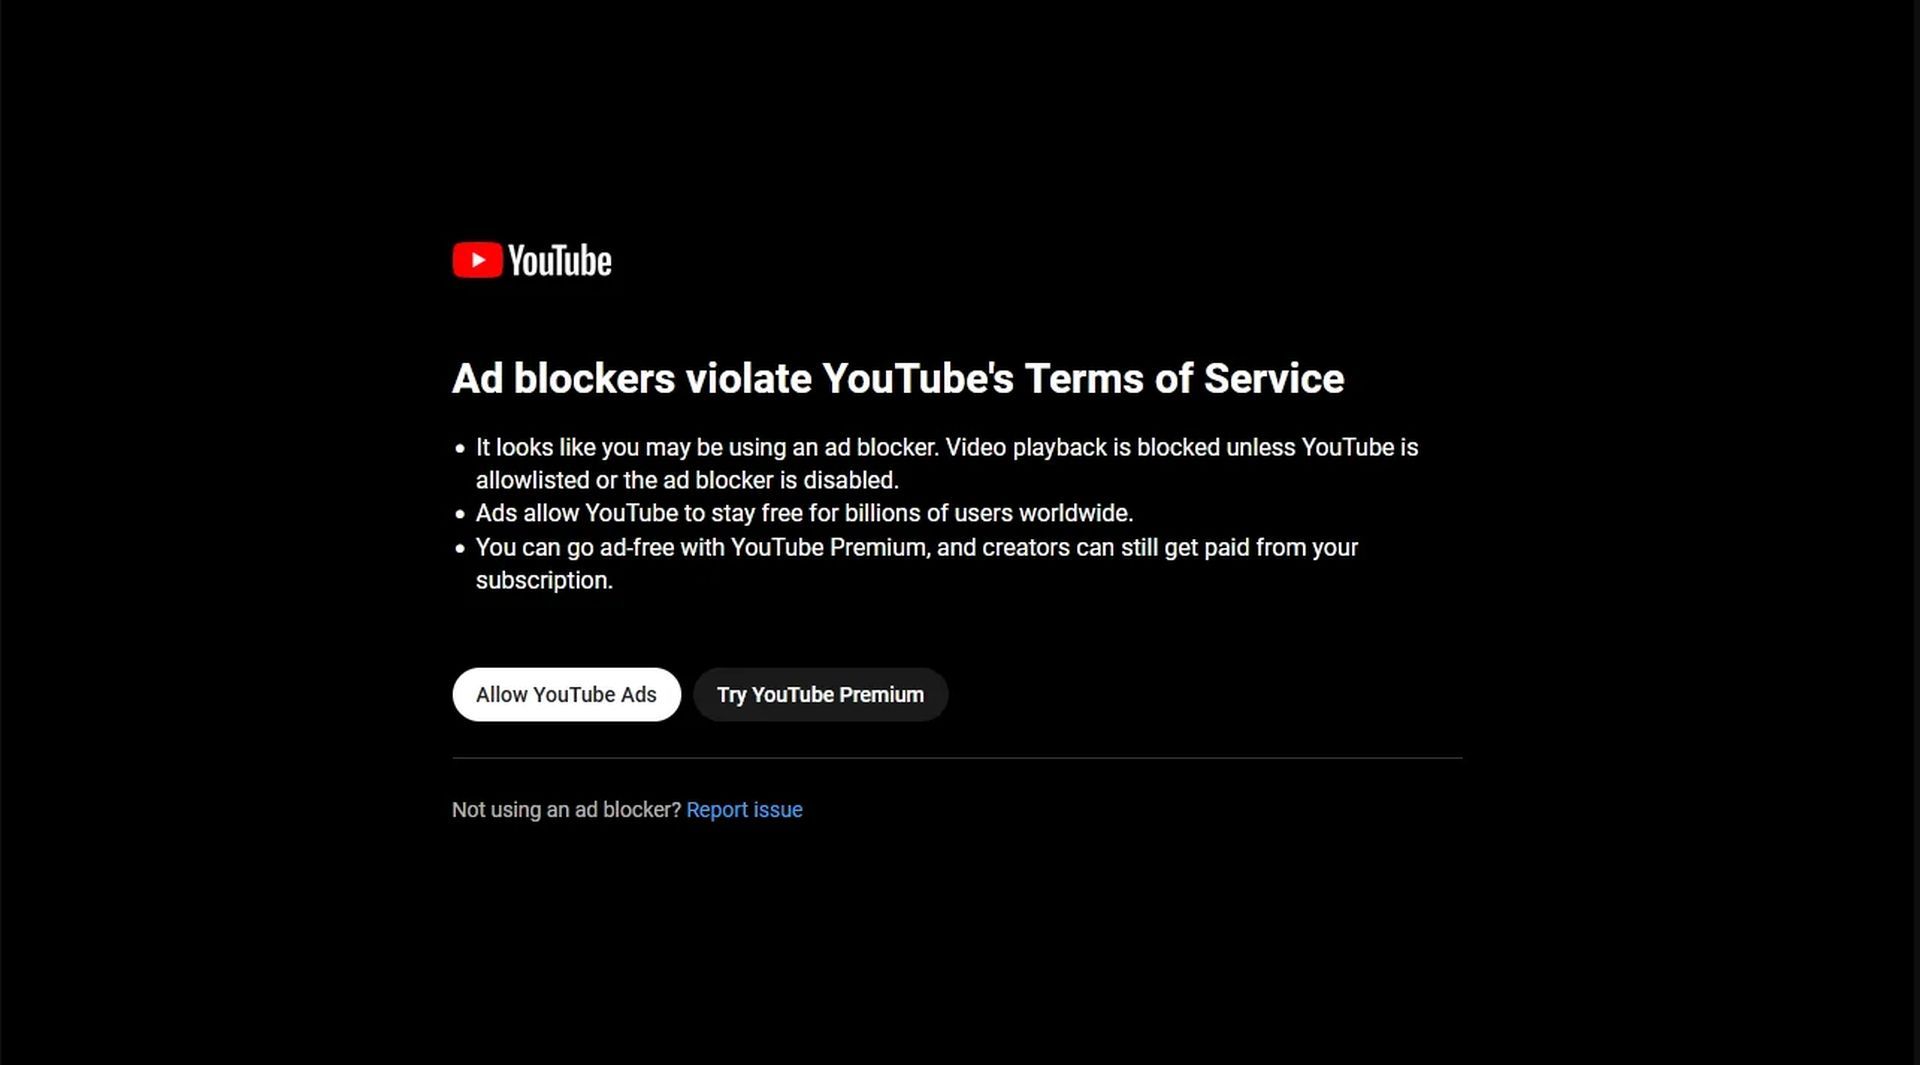 YouTube bans ad blockers